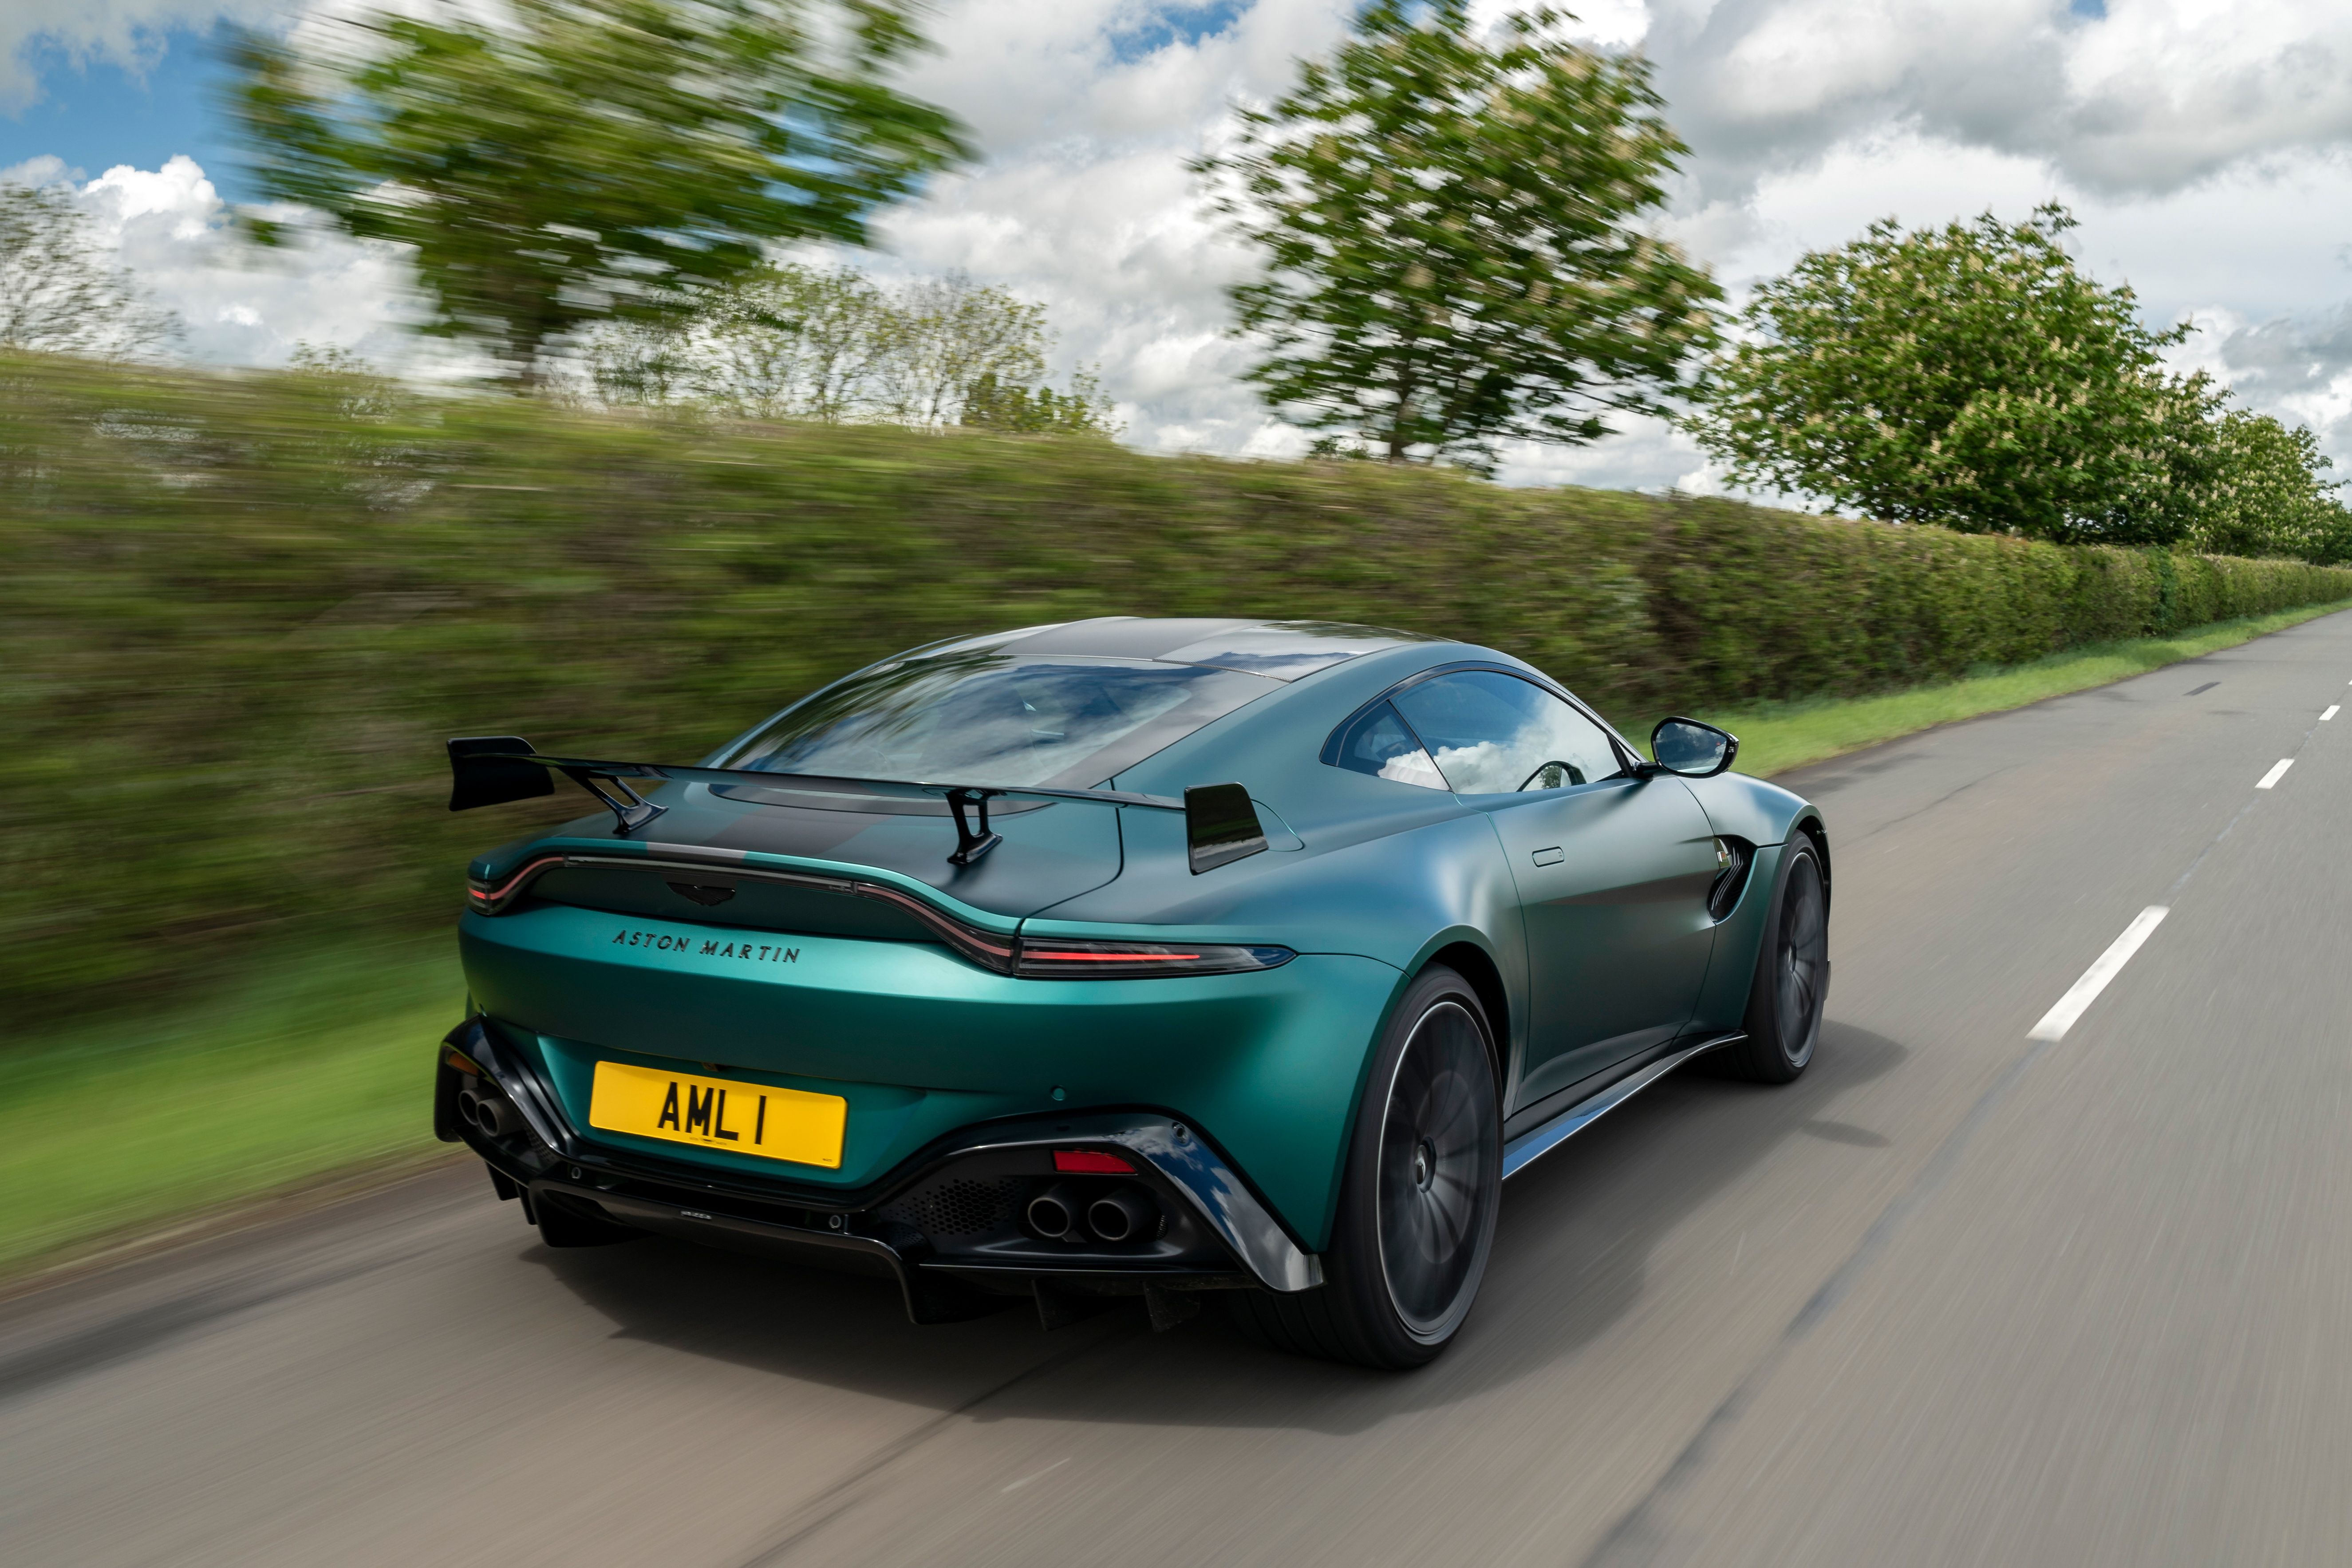 View Photos of the 2021 Aston Martin Vantage F1 Edition - newsbinding